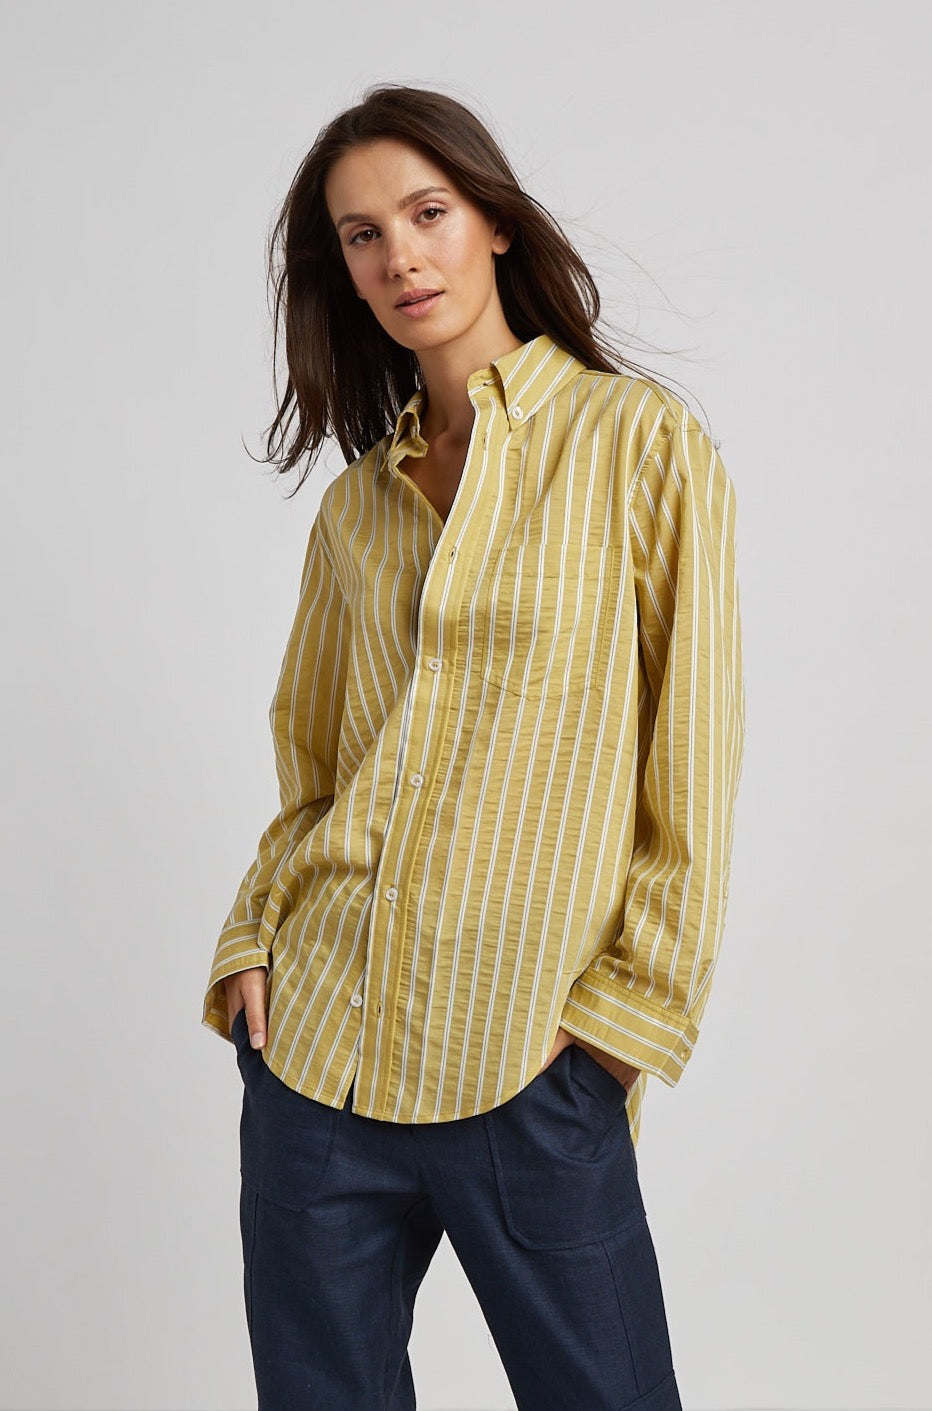 Adroit Atelier Kean Boyfriend Striped Button Down Shirt in Chartreuse